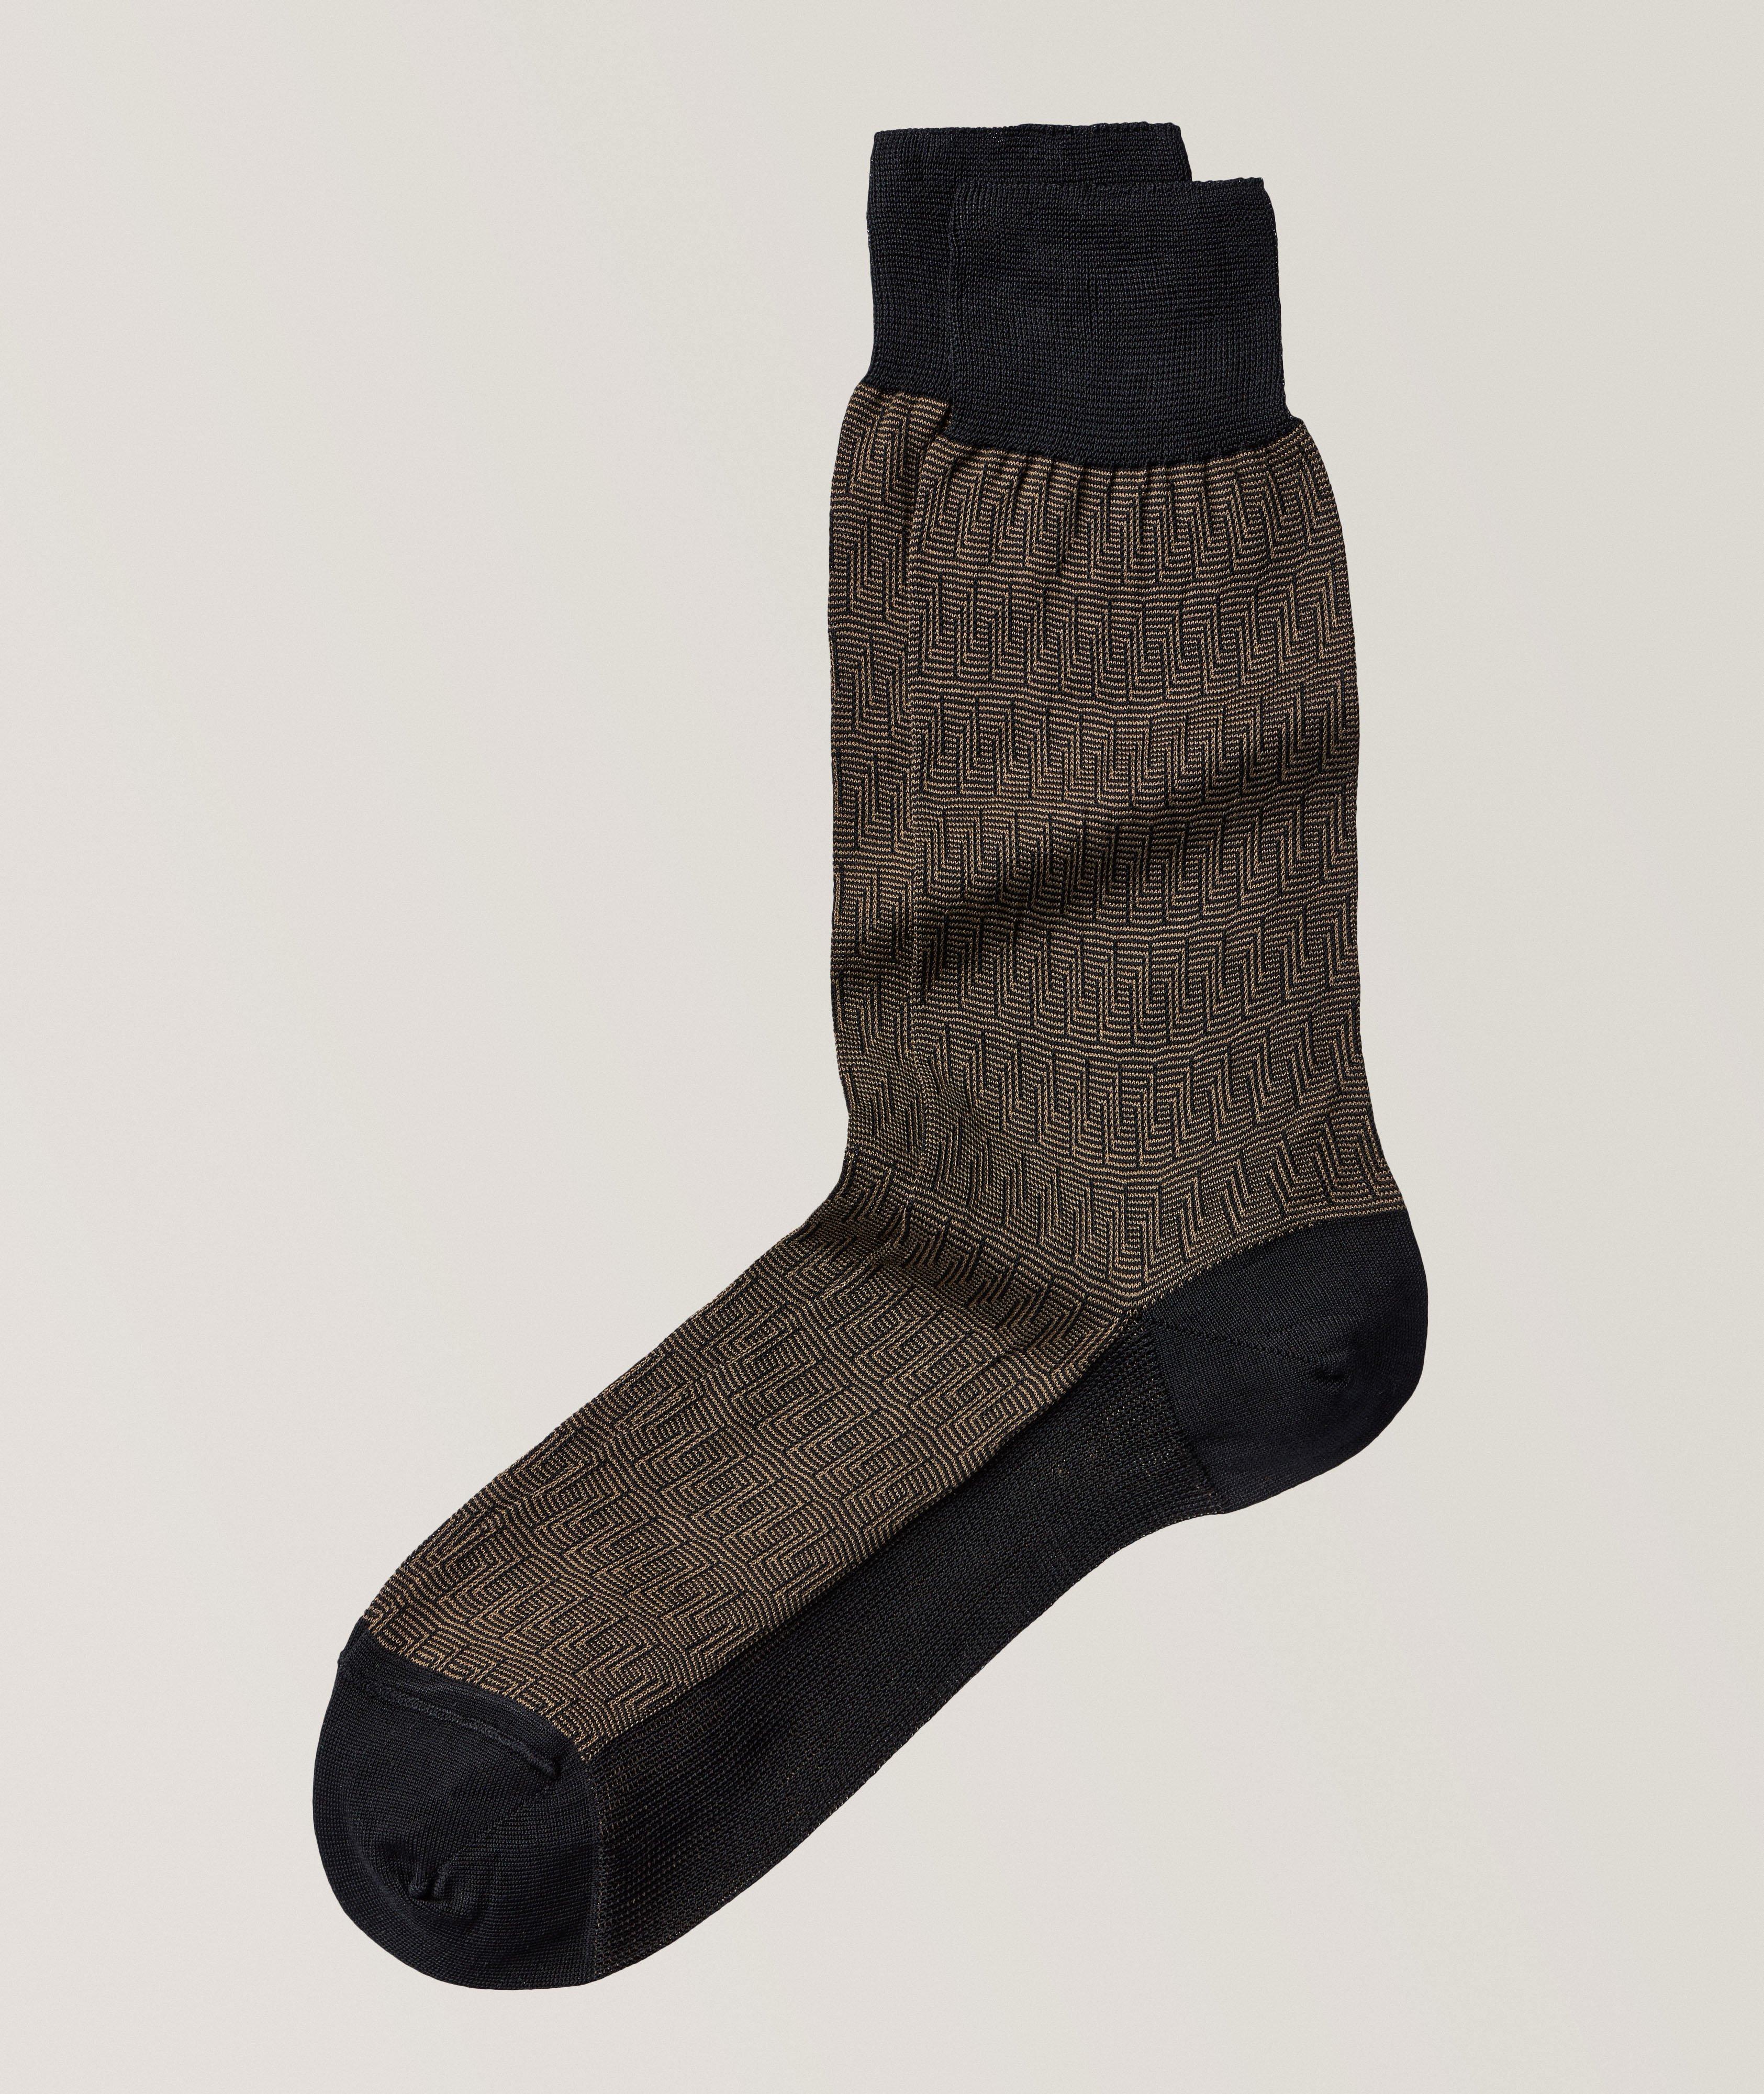 Geometric Cotton-Blend Dress Socks image 0